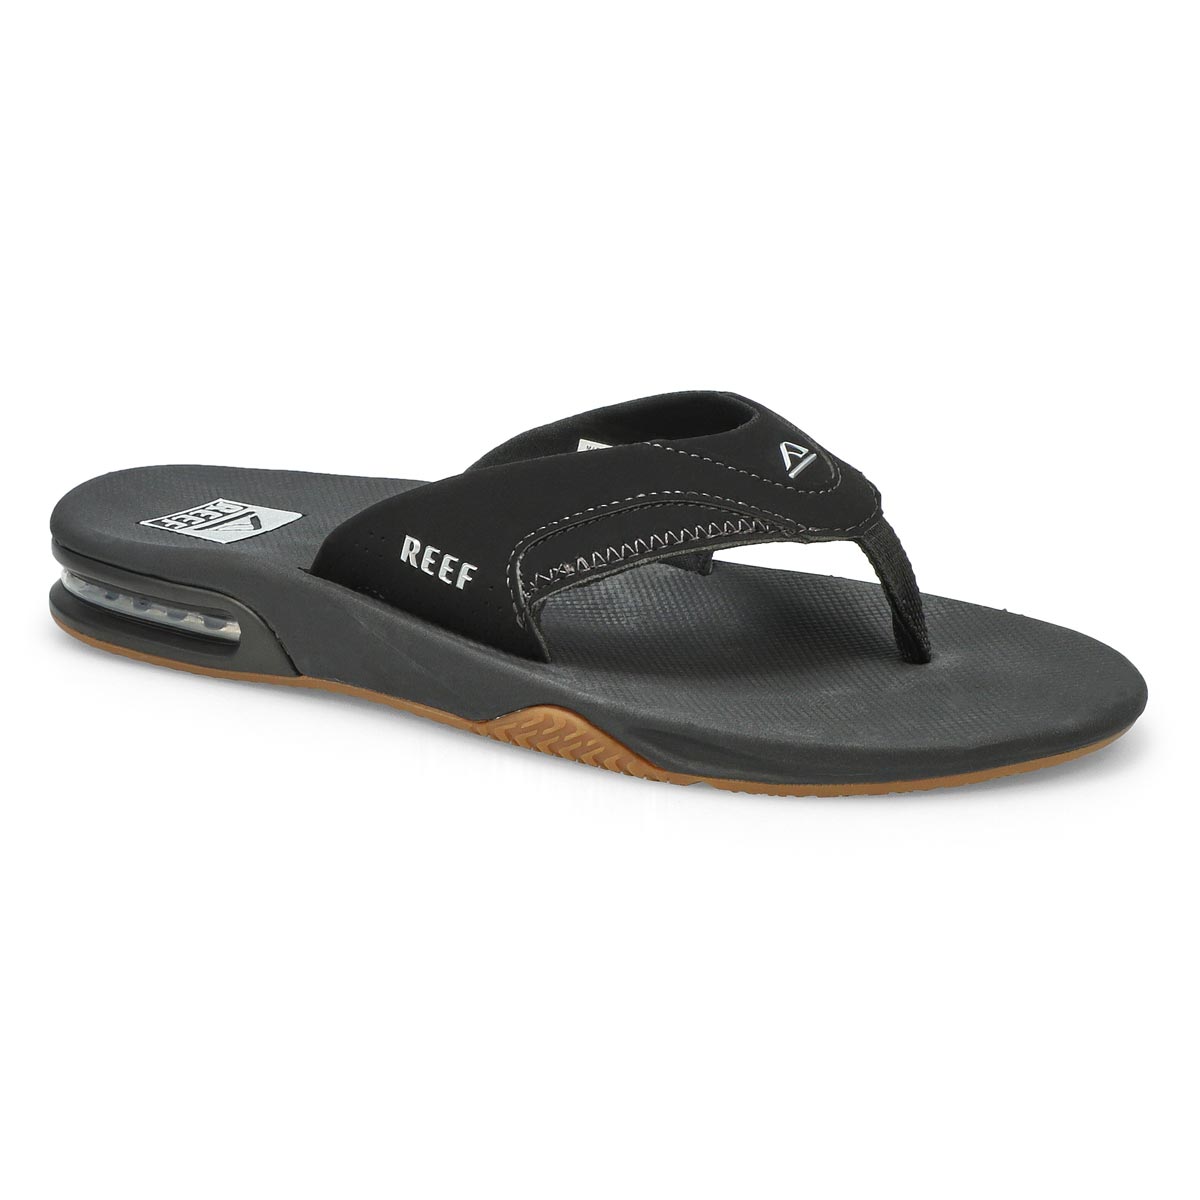 Reef Men's Fanning Thong Sandal - Black/Silve | SoftMoc.com